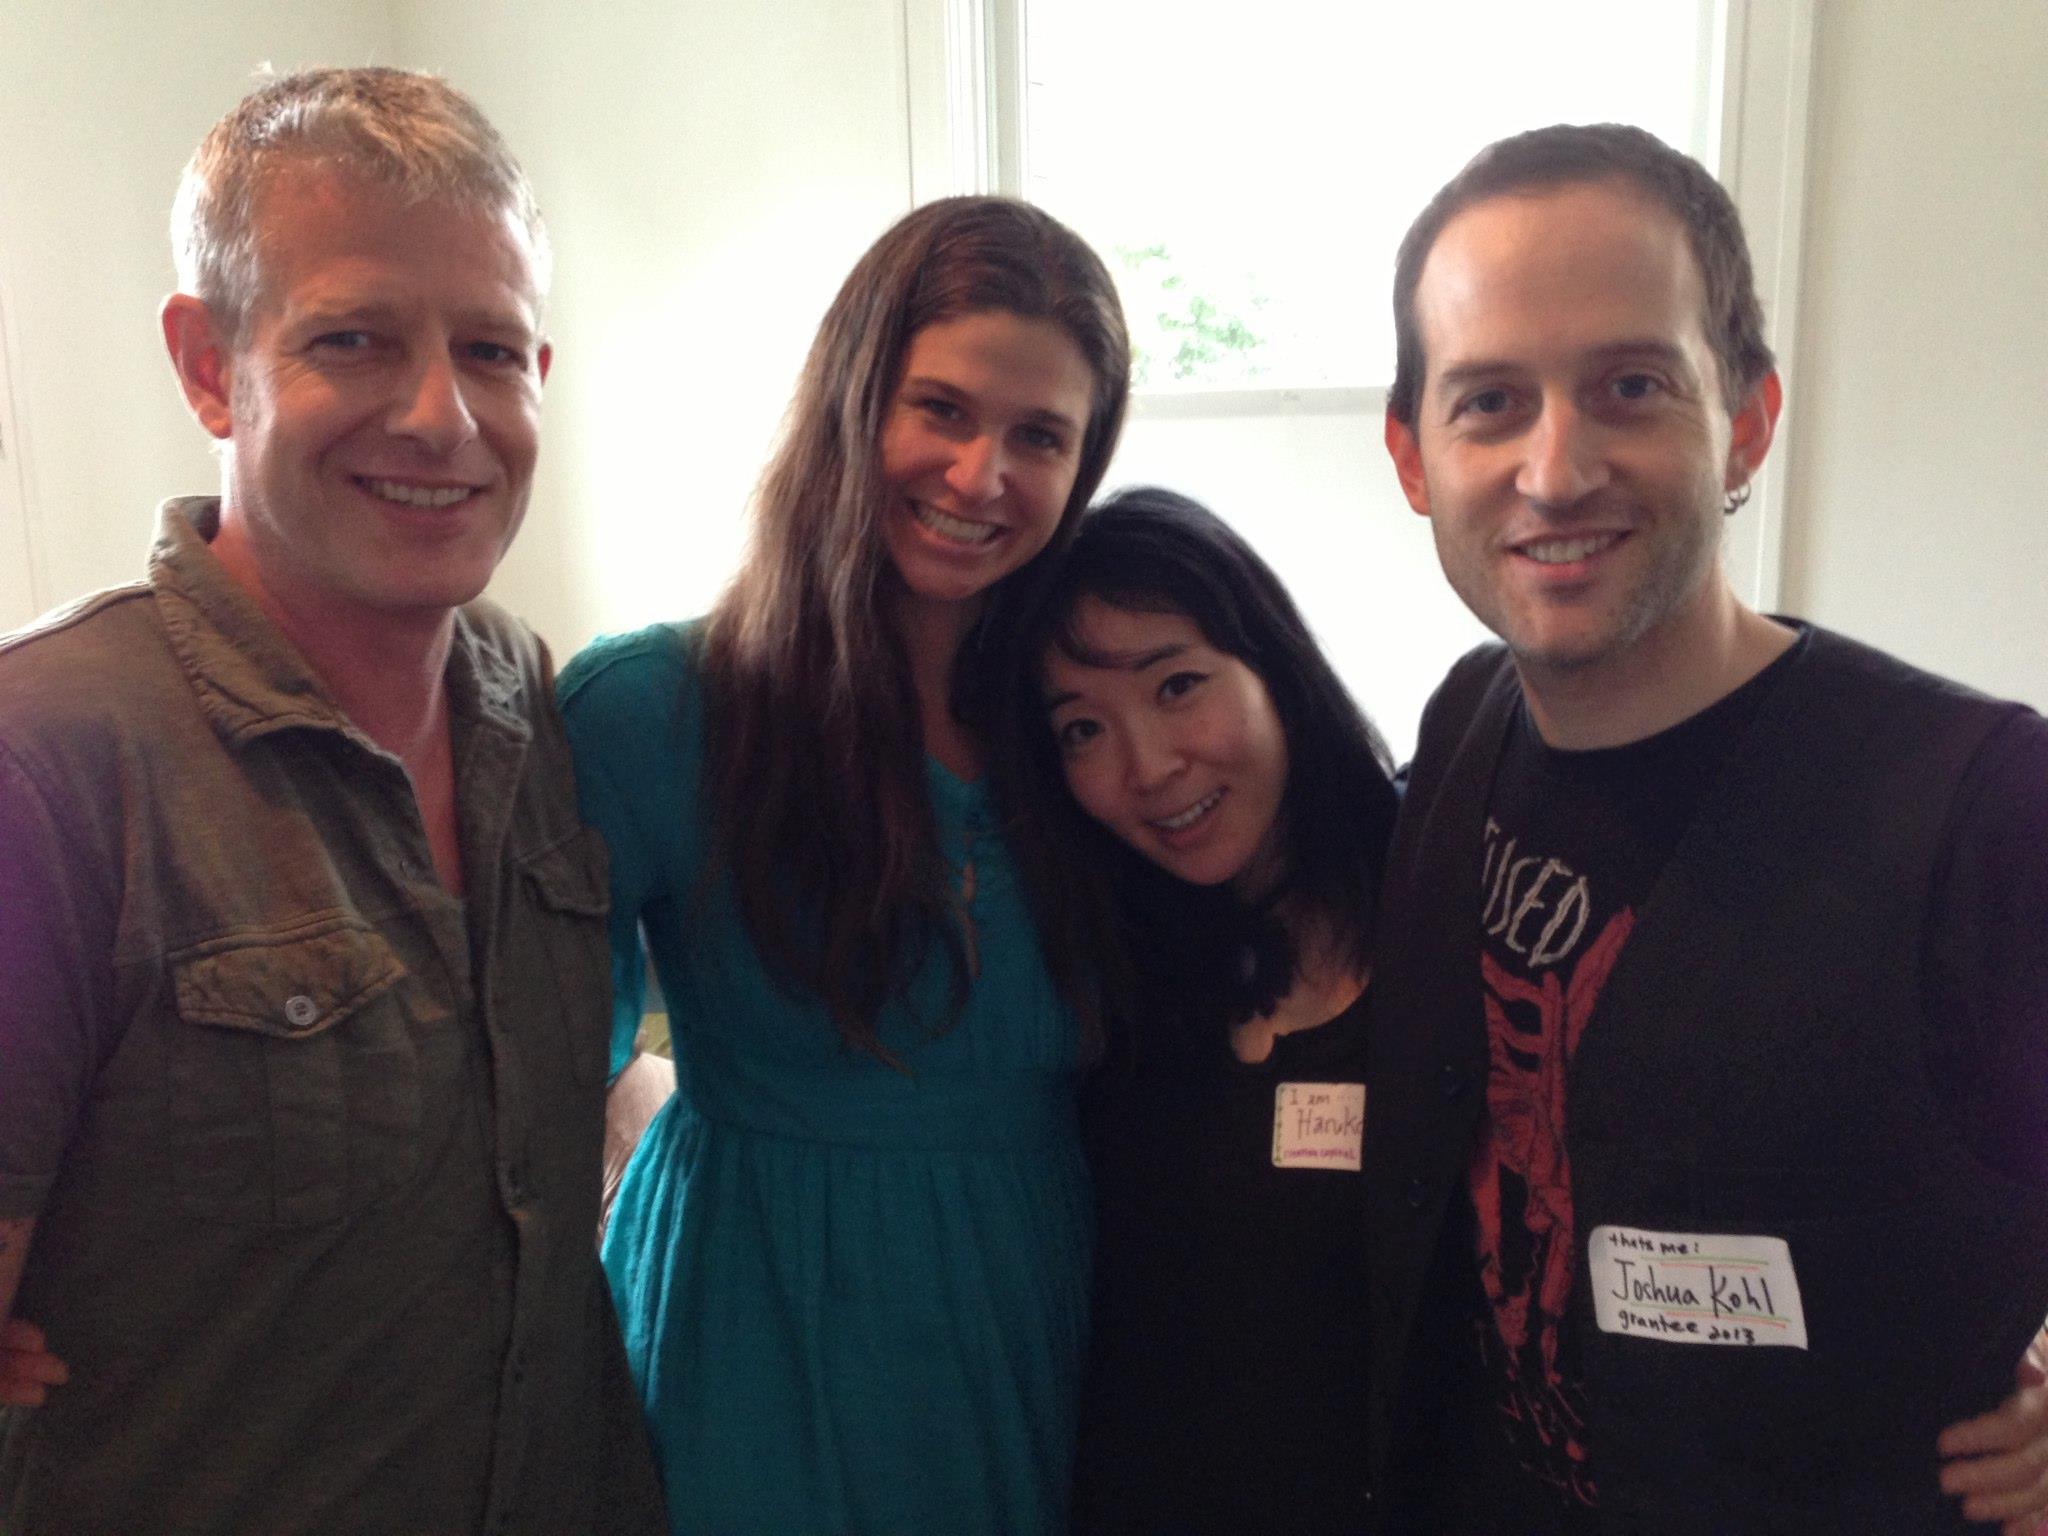 Creative Capital grantees Haruko Nishimura and Joshua Kohl of Degenerate Art Ensemble with friends